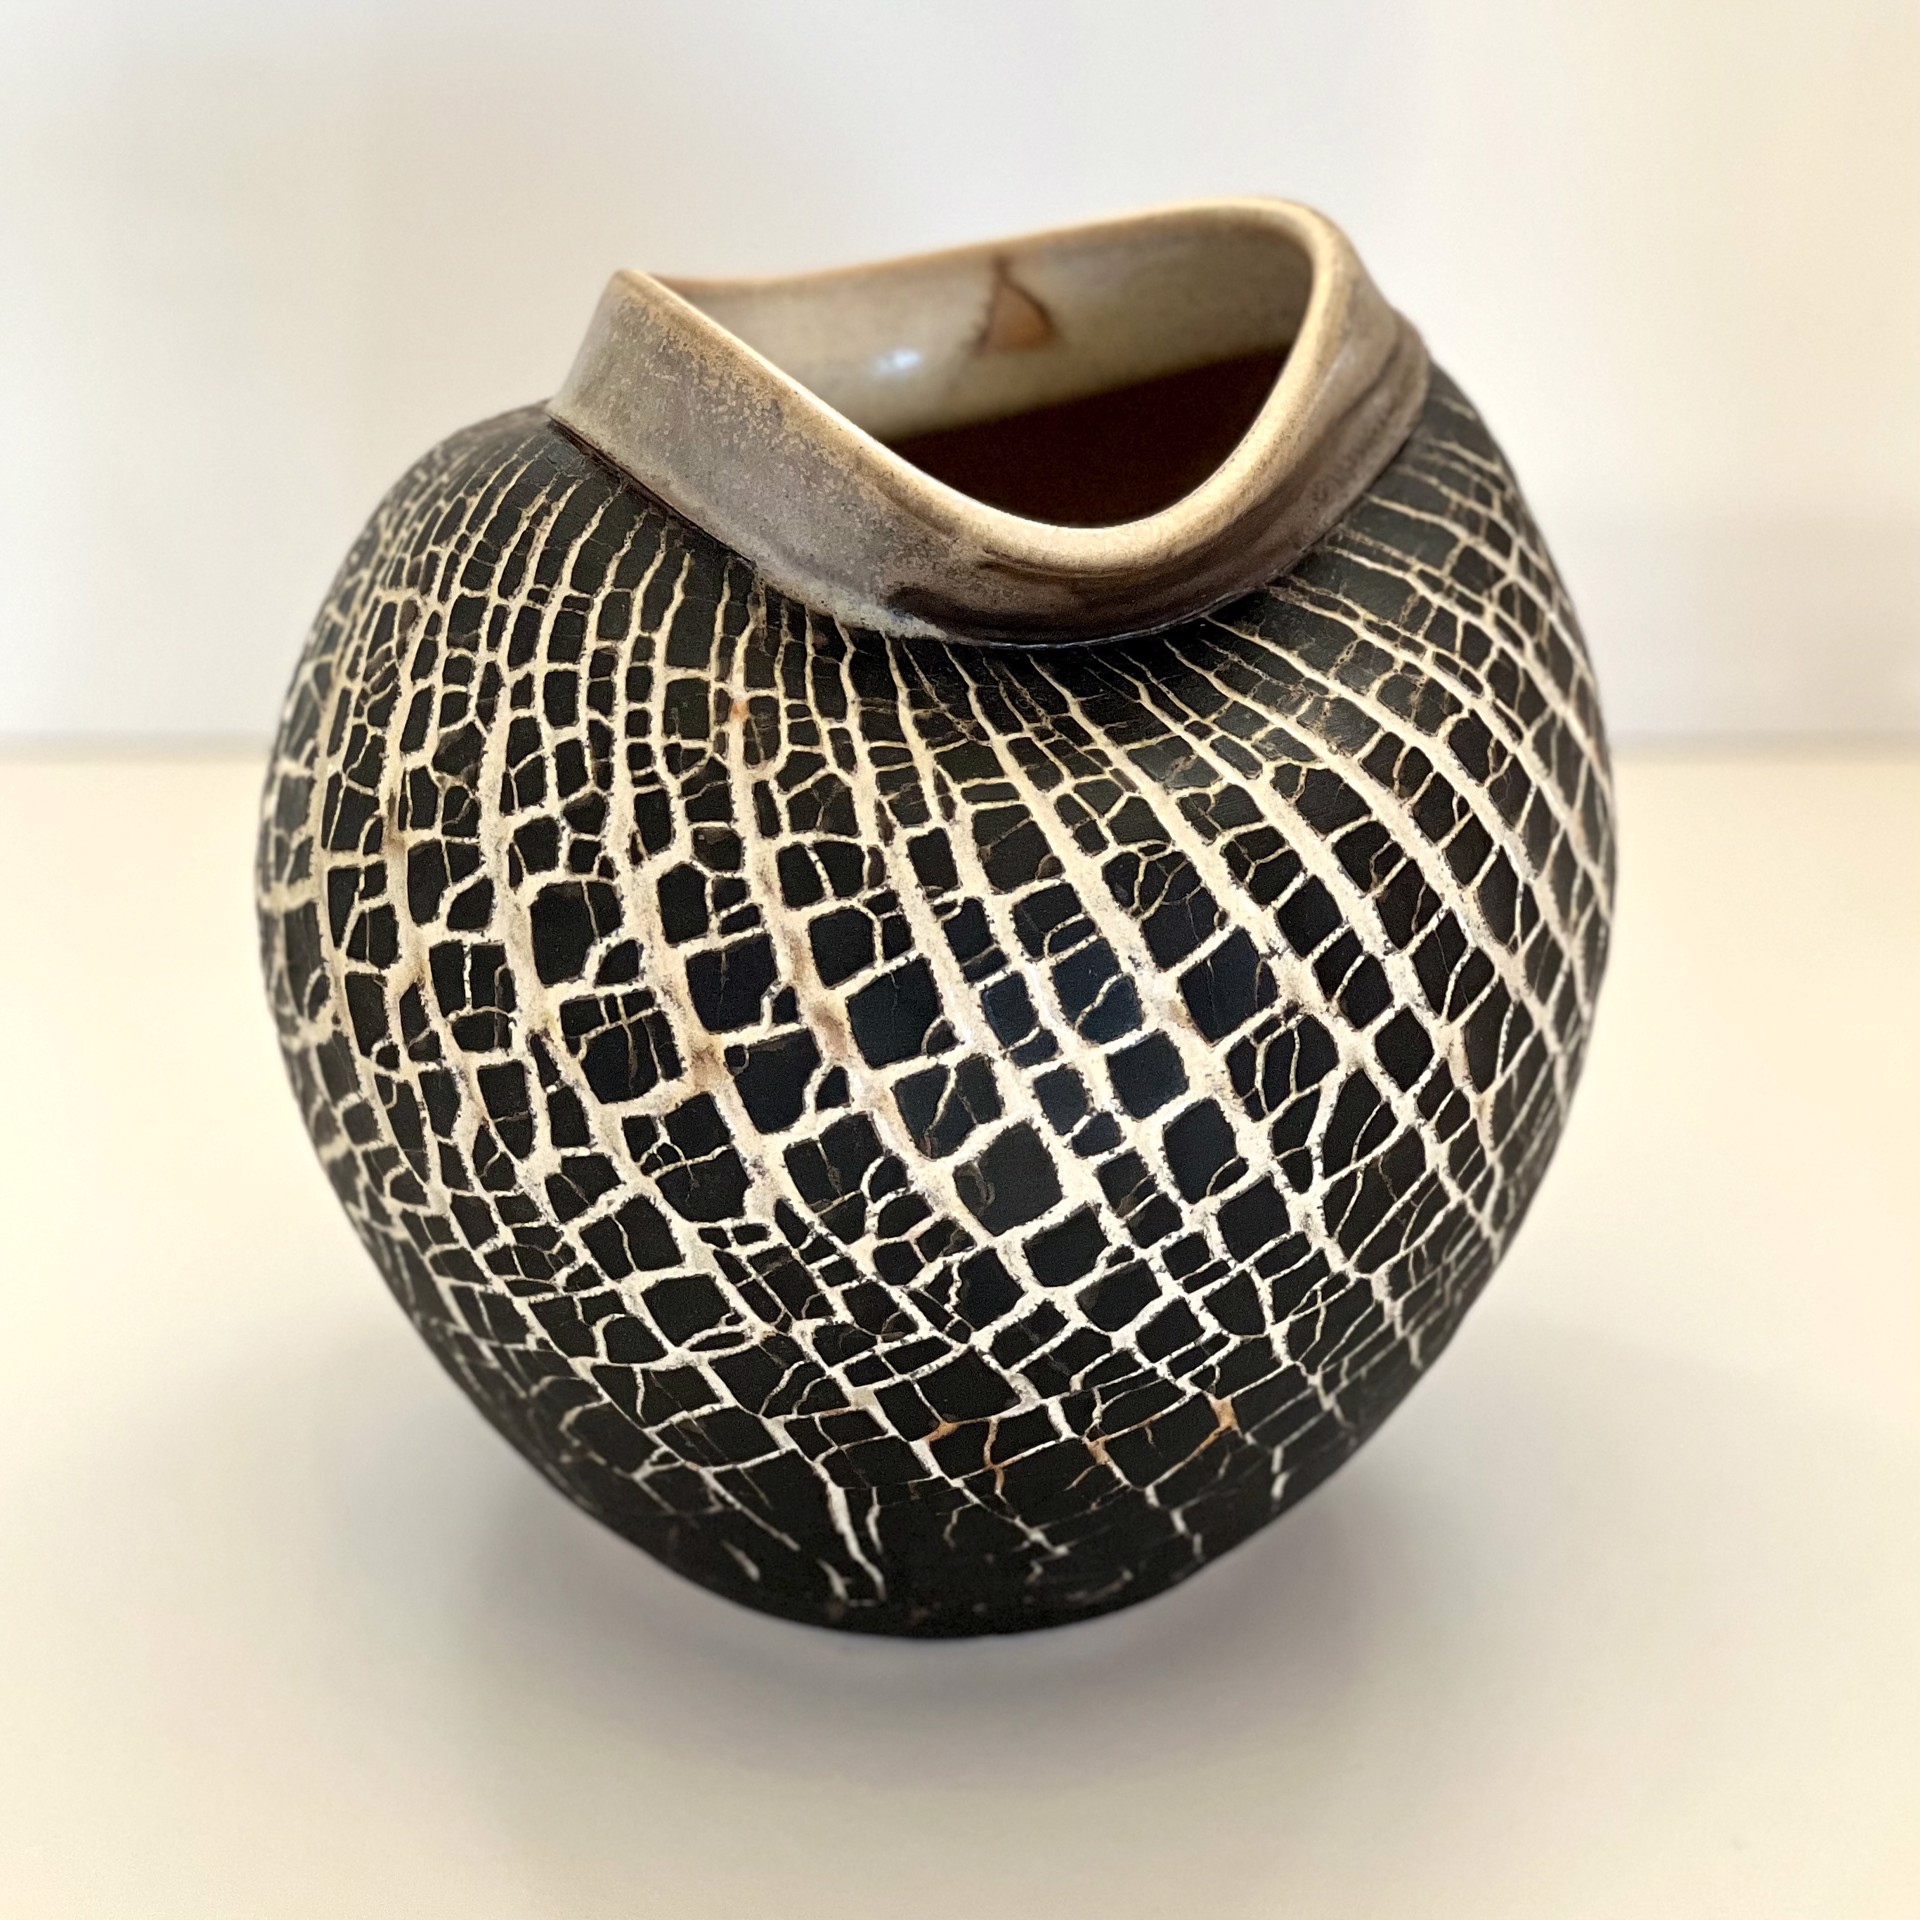 Vase 7 by David LaLomia